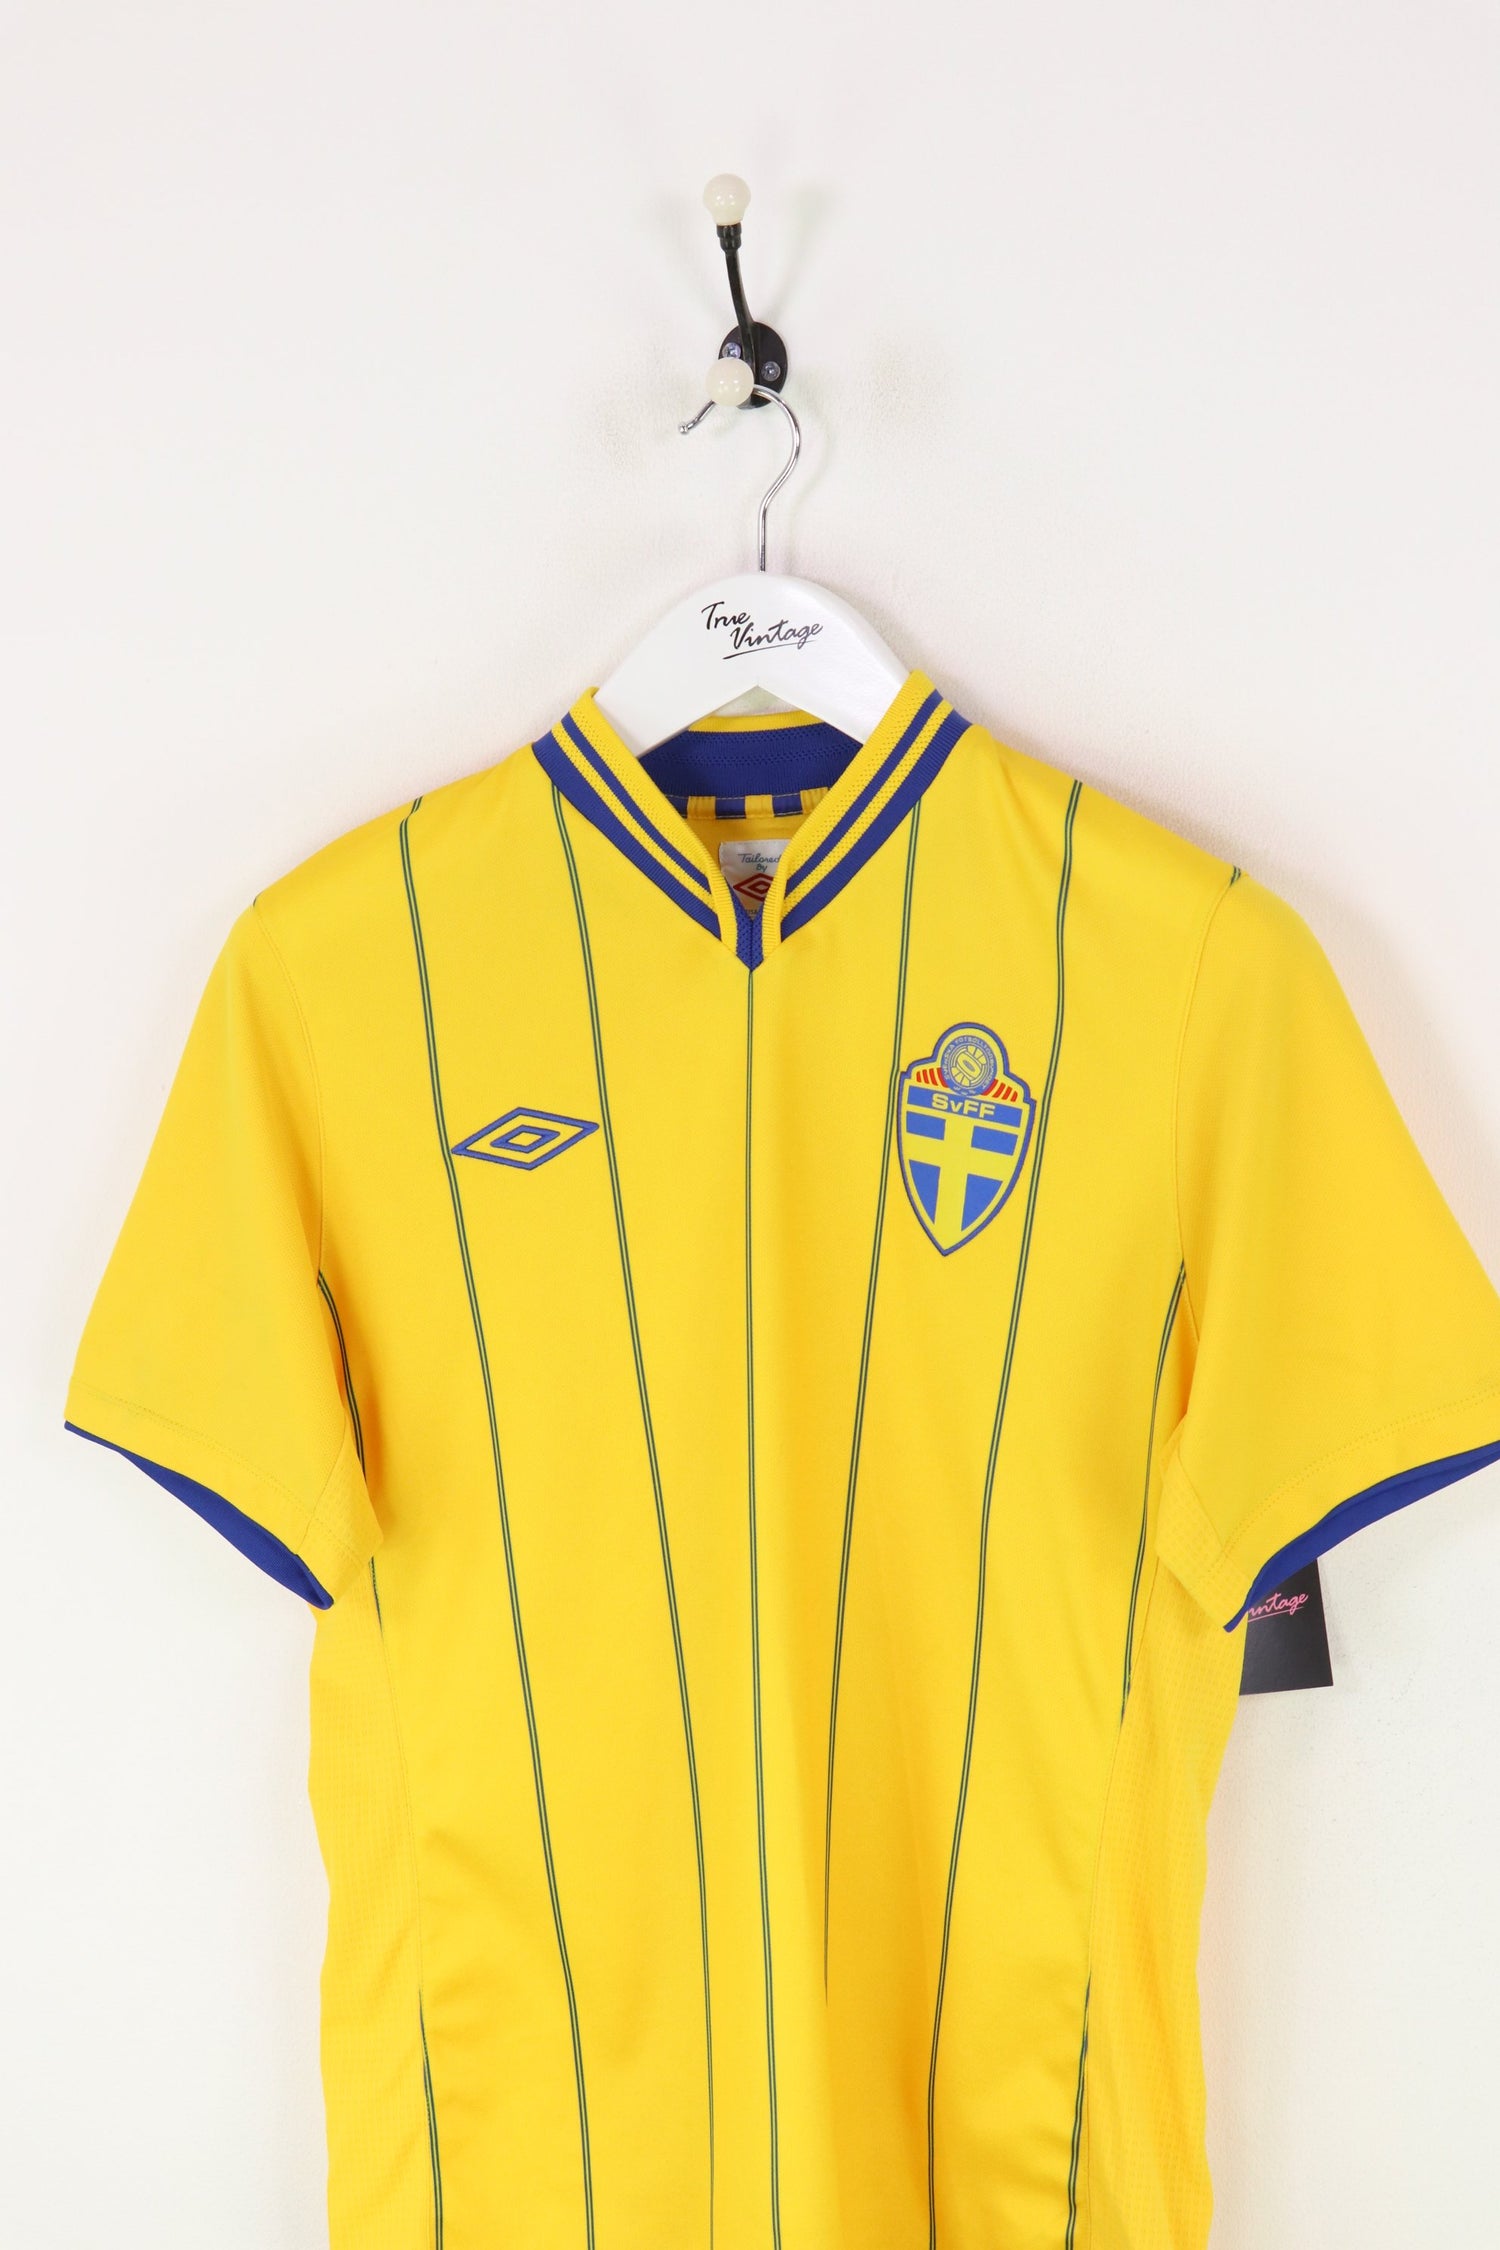 Umbro Sweden Football Shirt Yellow Medium